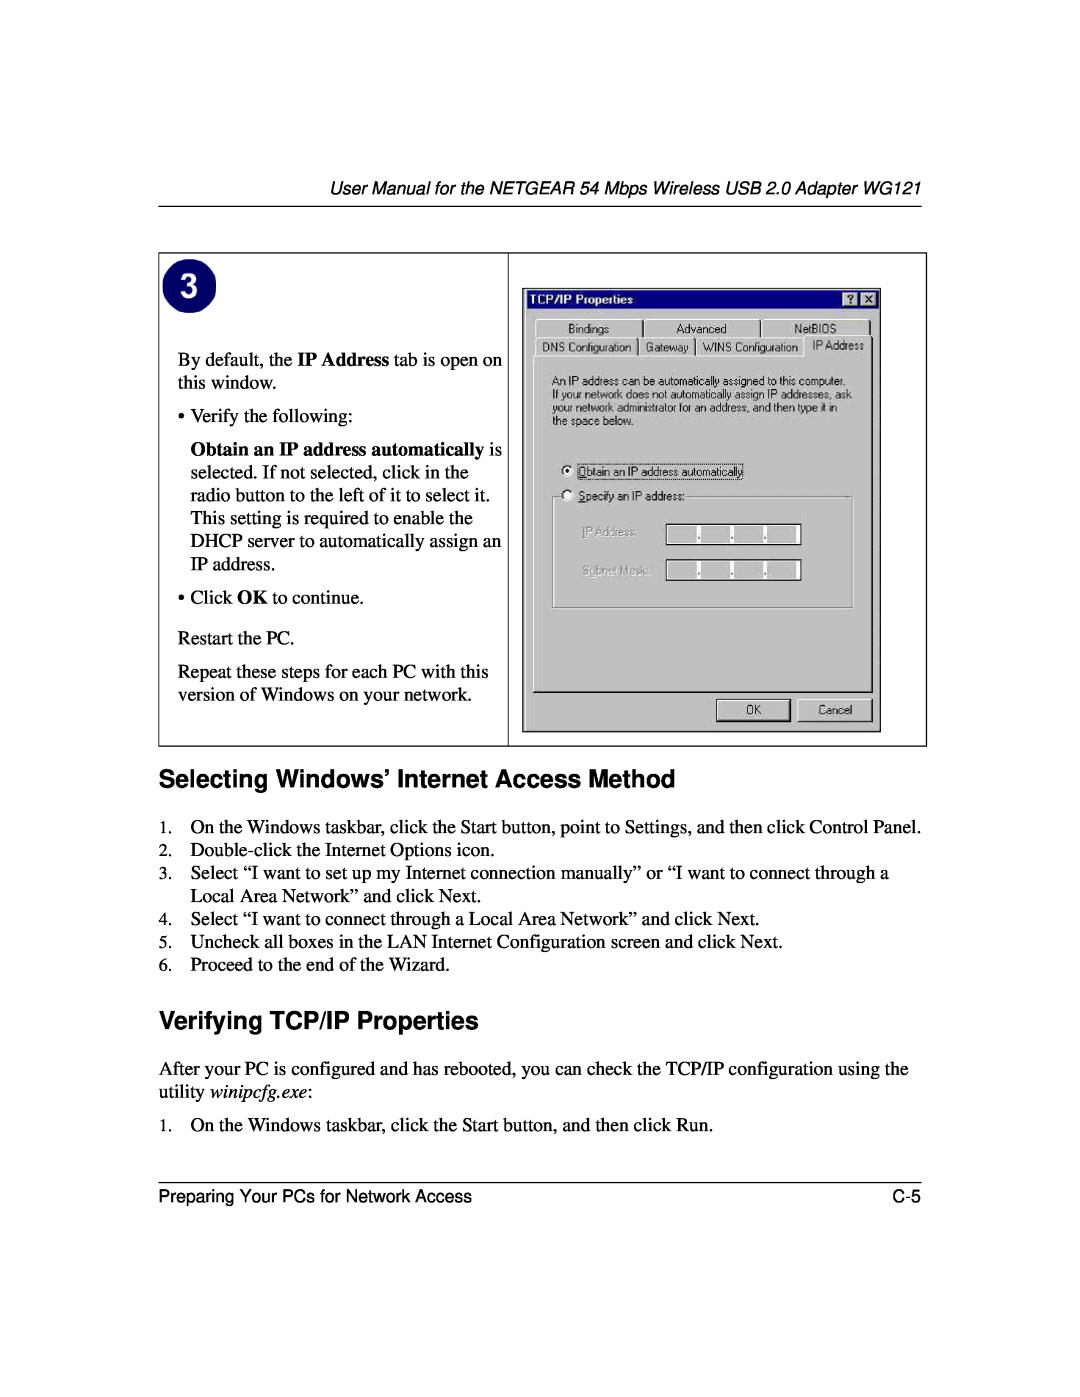 NETGEAR WG121 user manual Selecting Windows’ Internet Access Method, Verifying TCP/IP Properties 